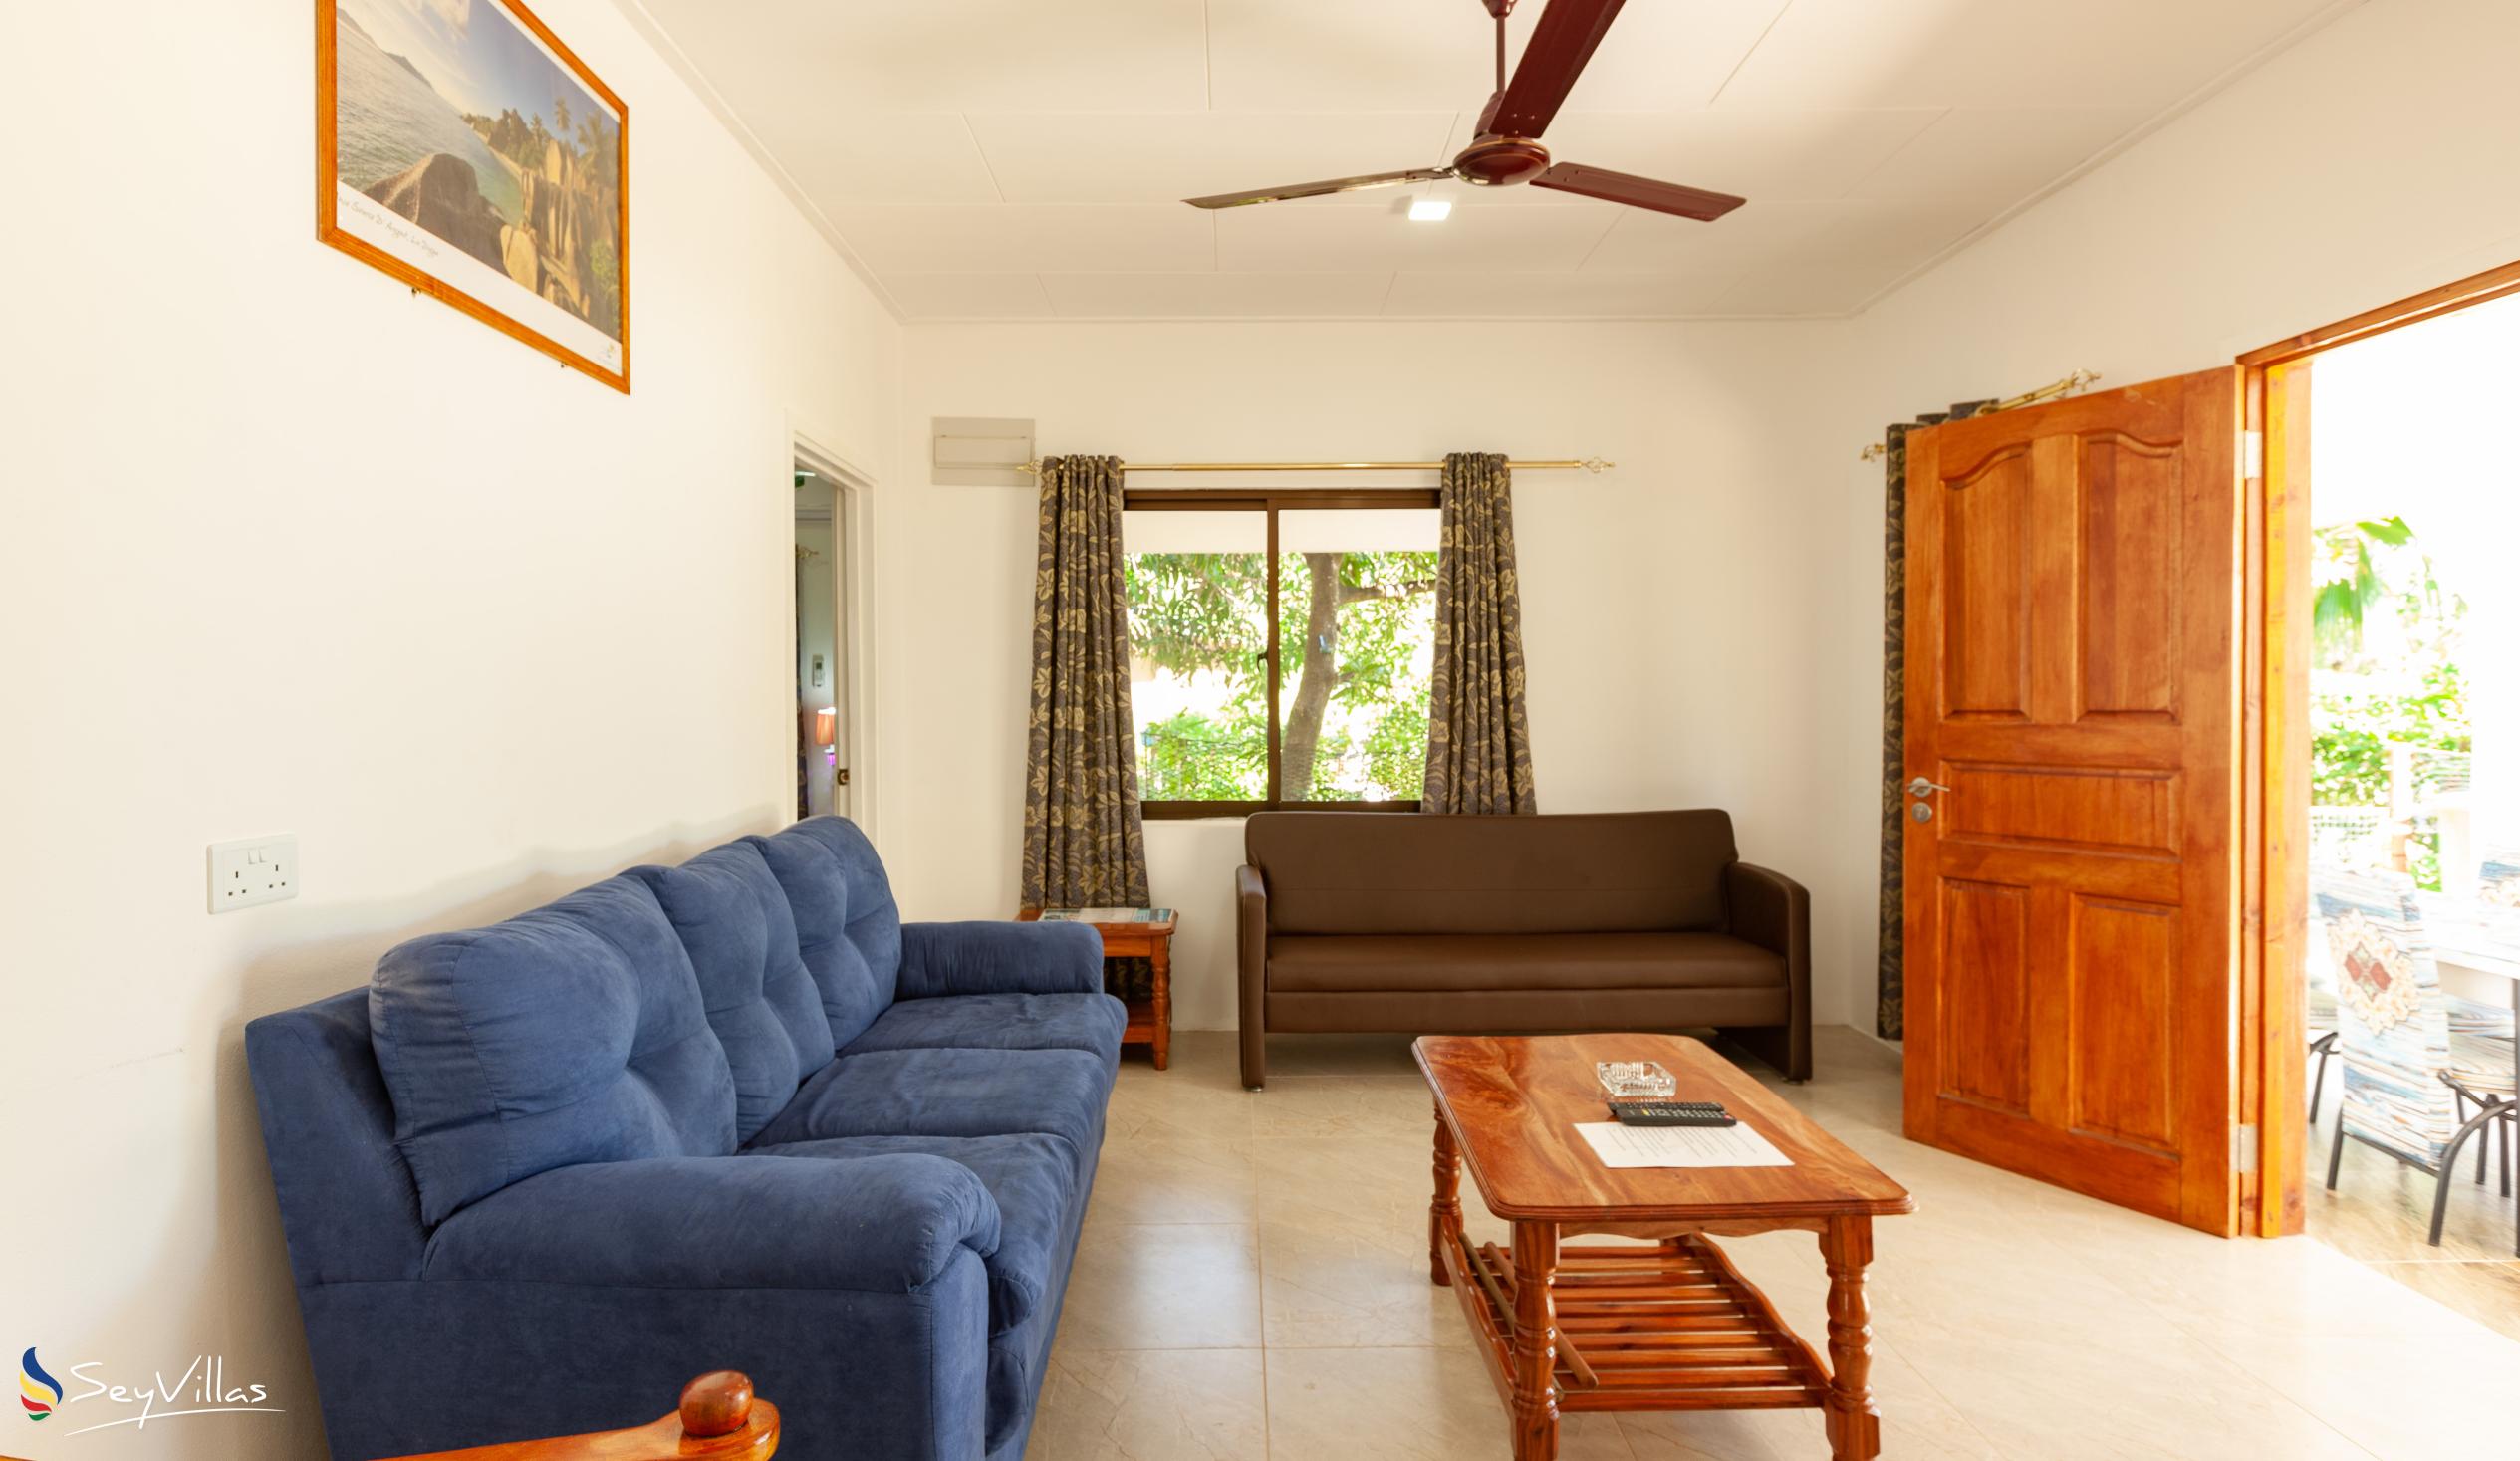 Photo 44: Anse Grosse Roche Beach Villa - 2-Bedroom Family Apartment - La Digue (Seychelles)